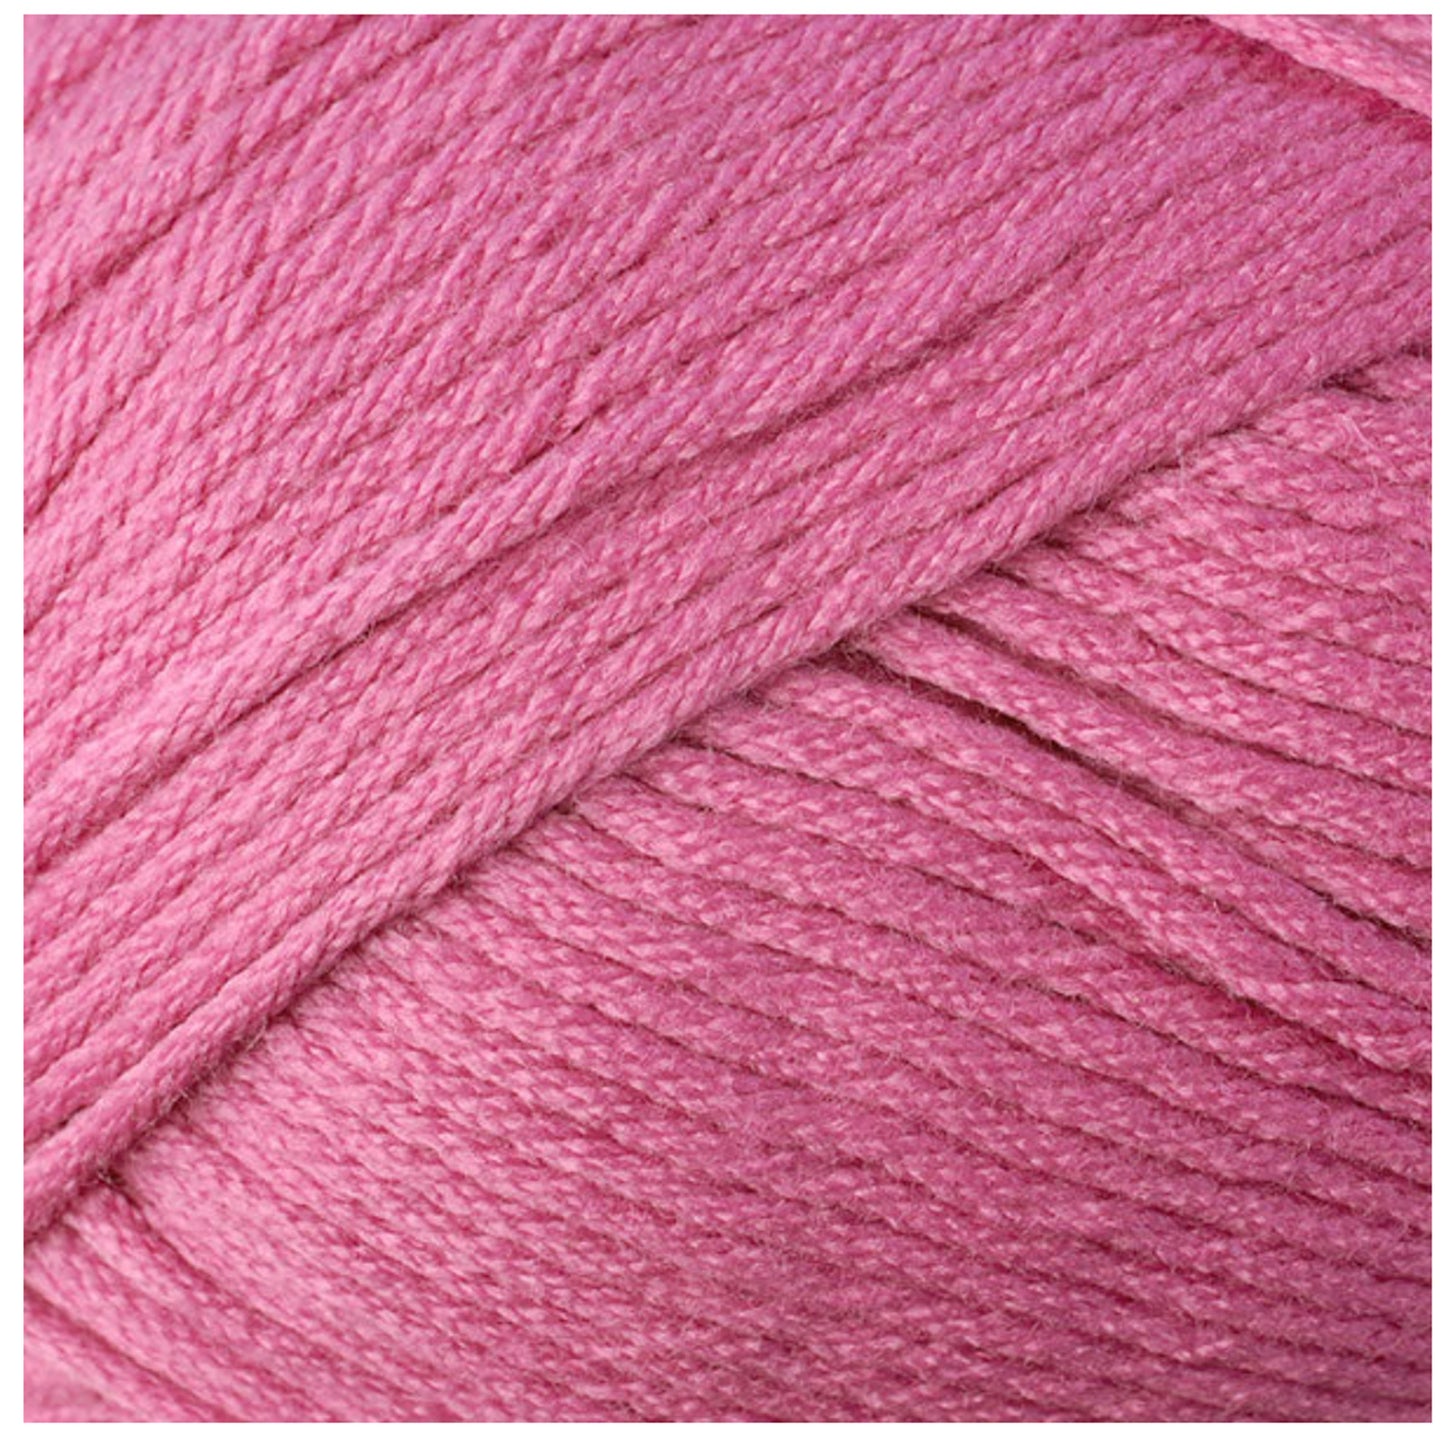 Colorful Crochet Skirt/Cowl - XS/S/M - Dream Color Crochet Kit Alternative View #3